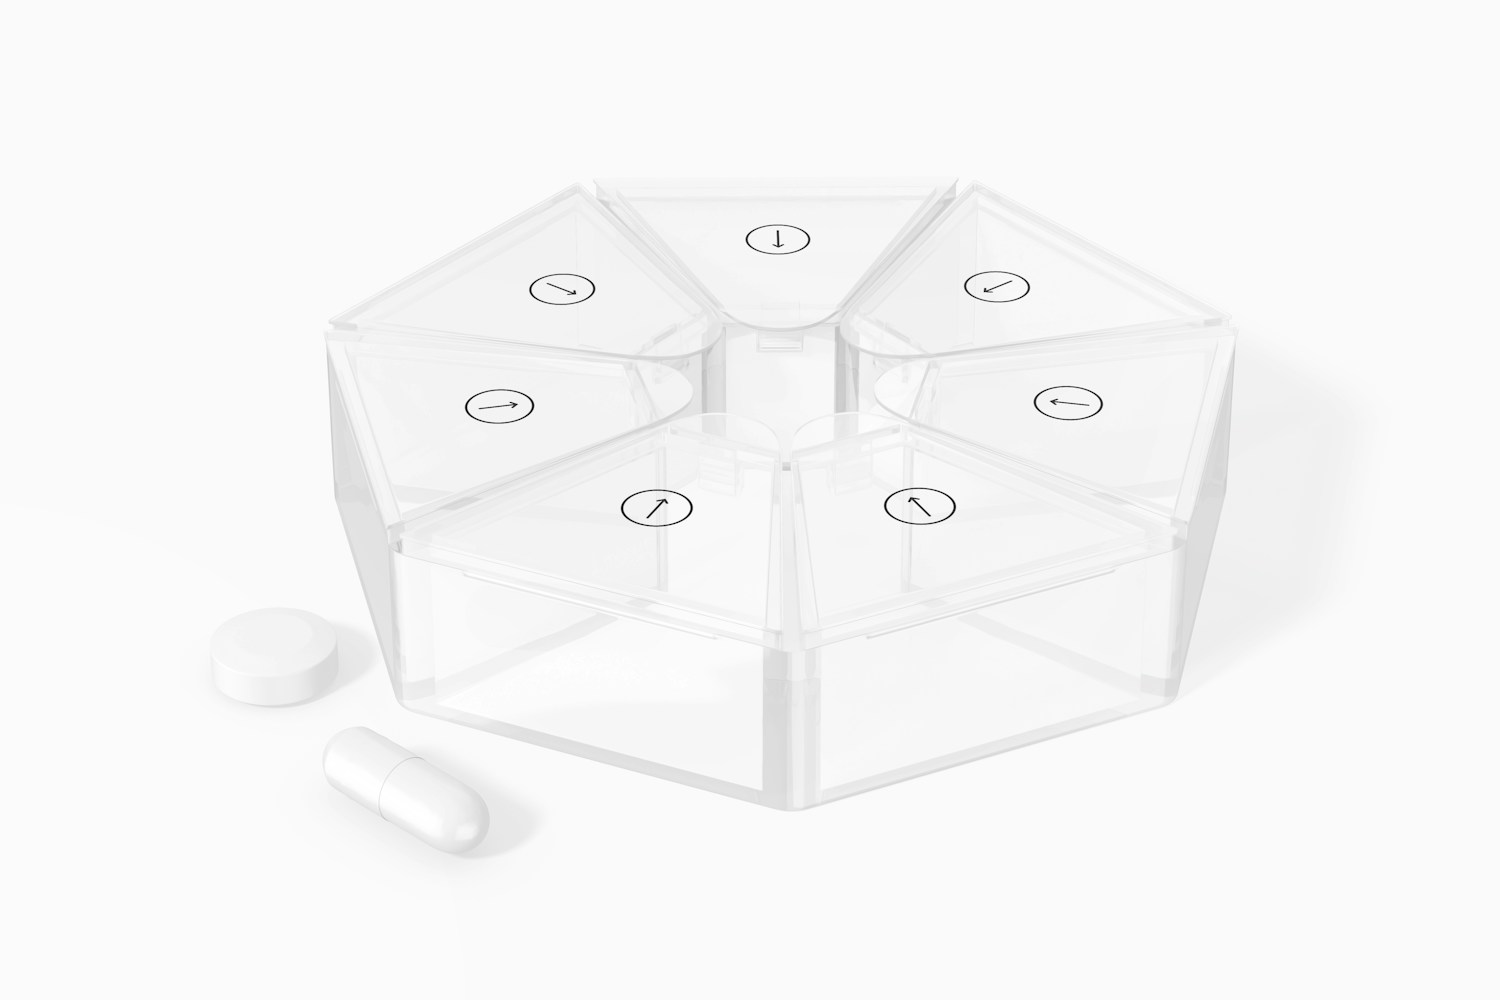 Heptagonal Pill Box Mockup